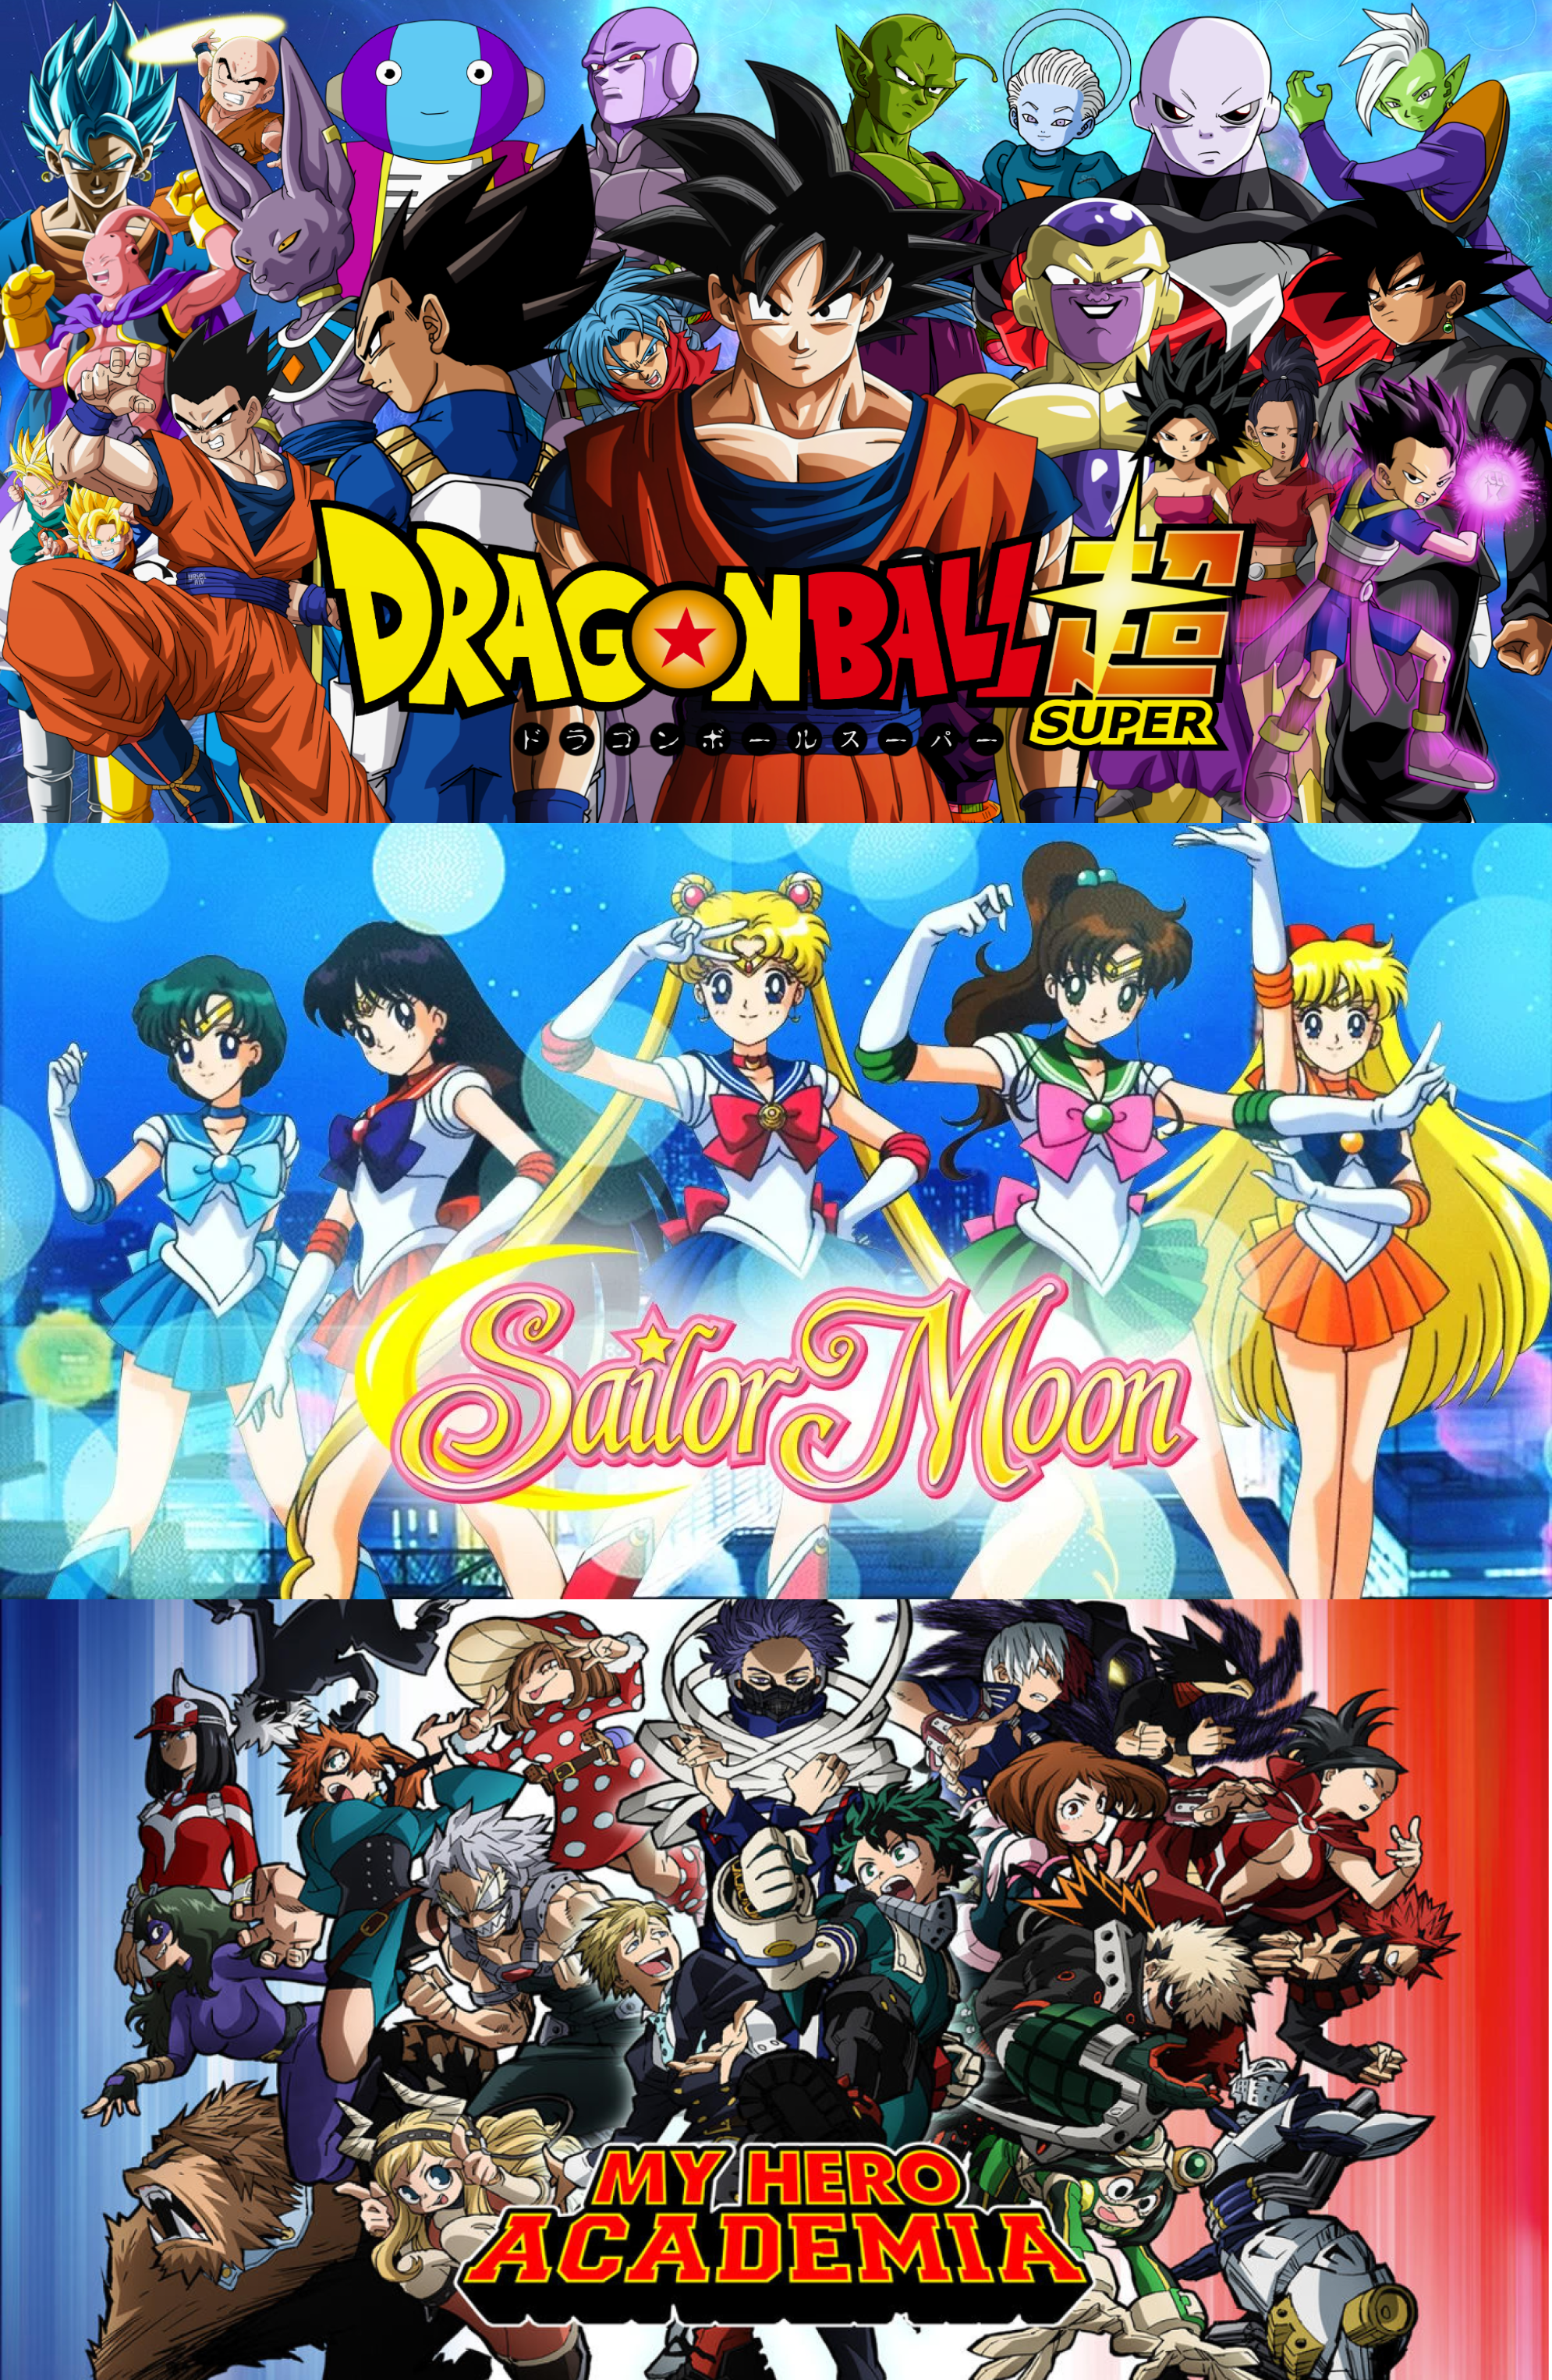 Dragon Ball and My Hero Academia Are Anime Cornerstones for